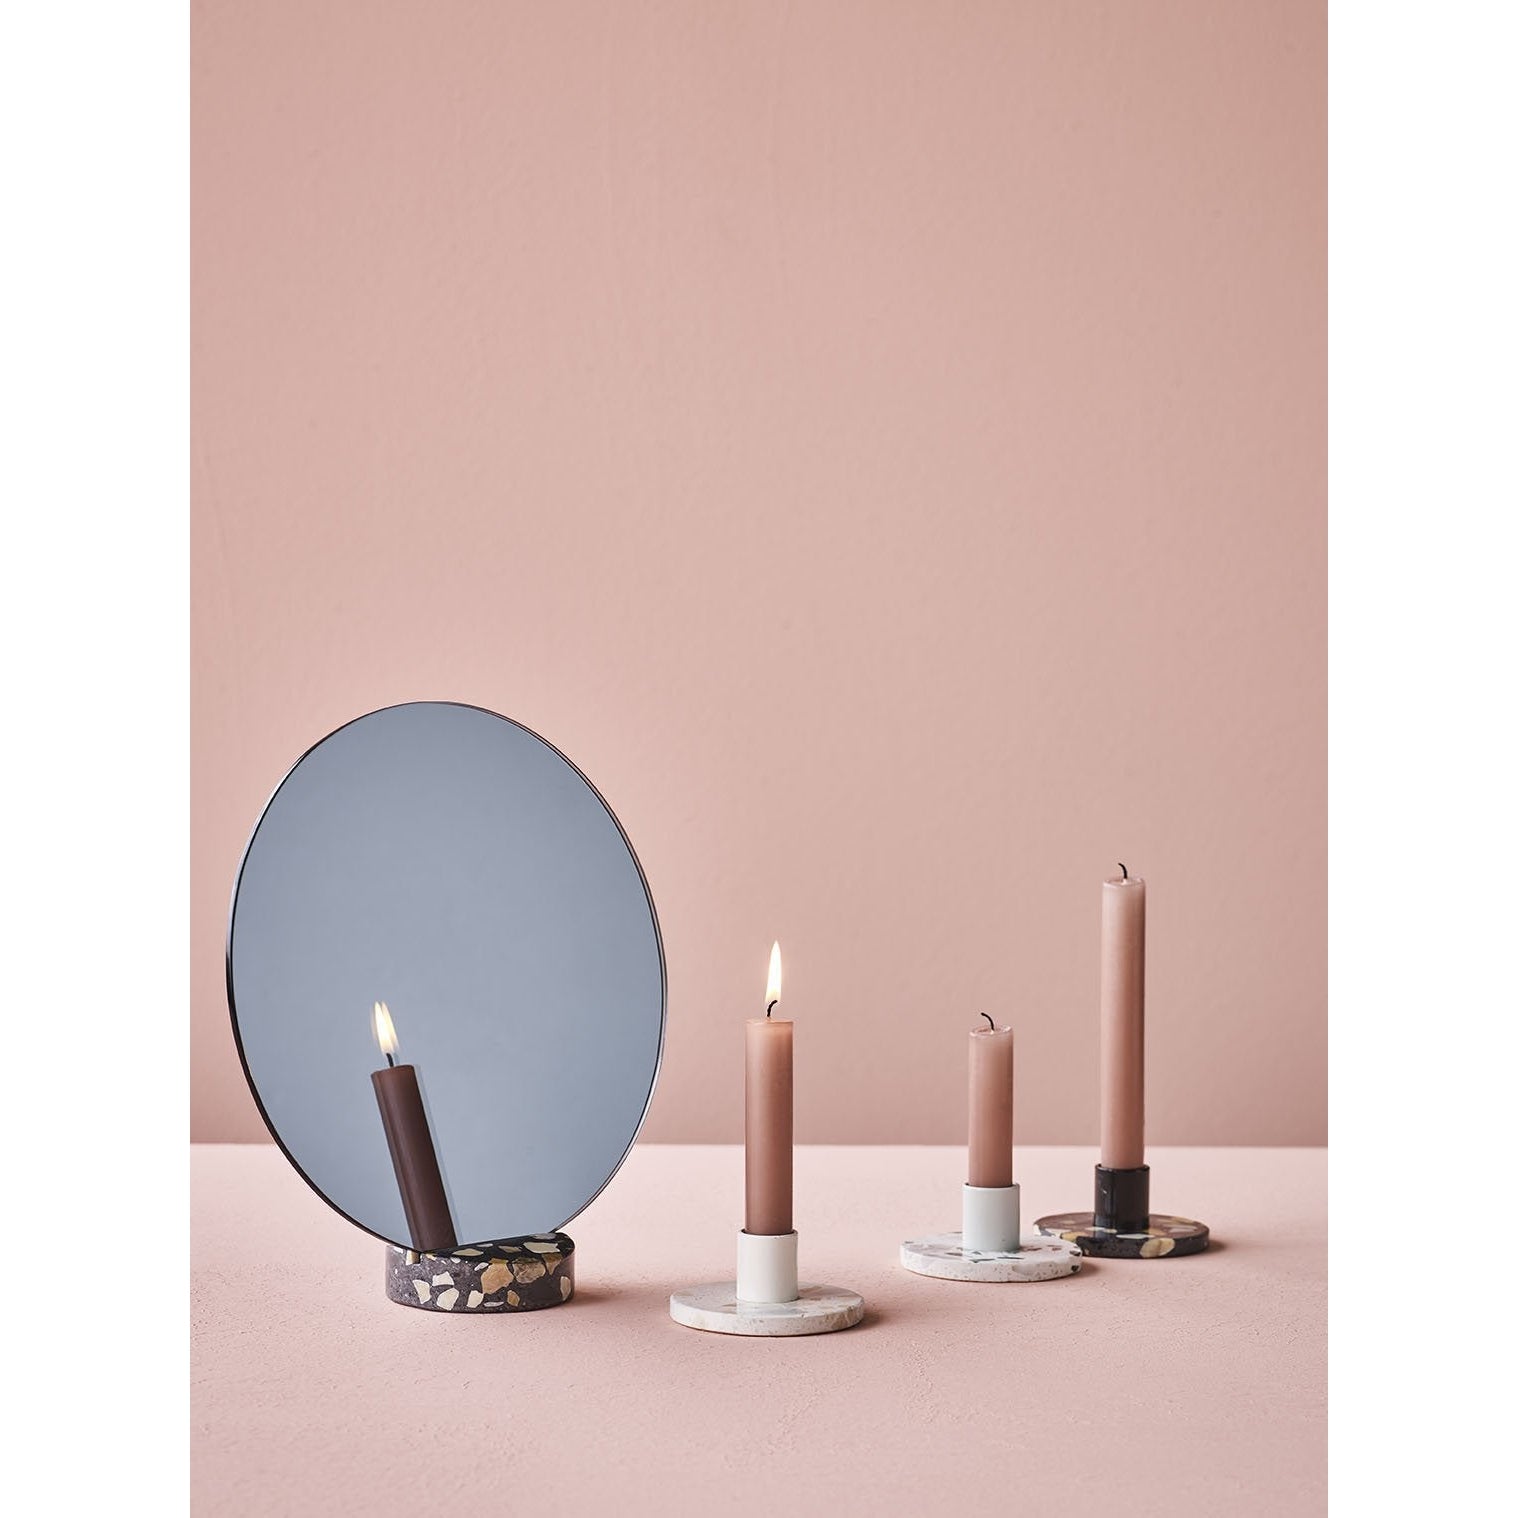 Lucie Kaas Erat Candlestick Pink, 8,5 cm